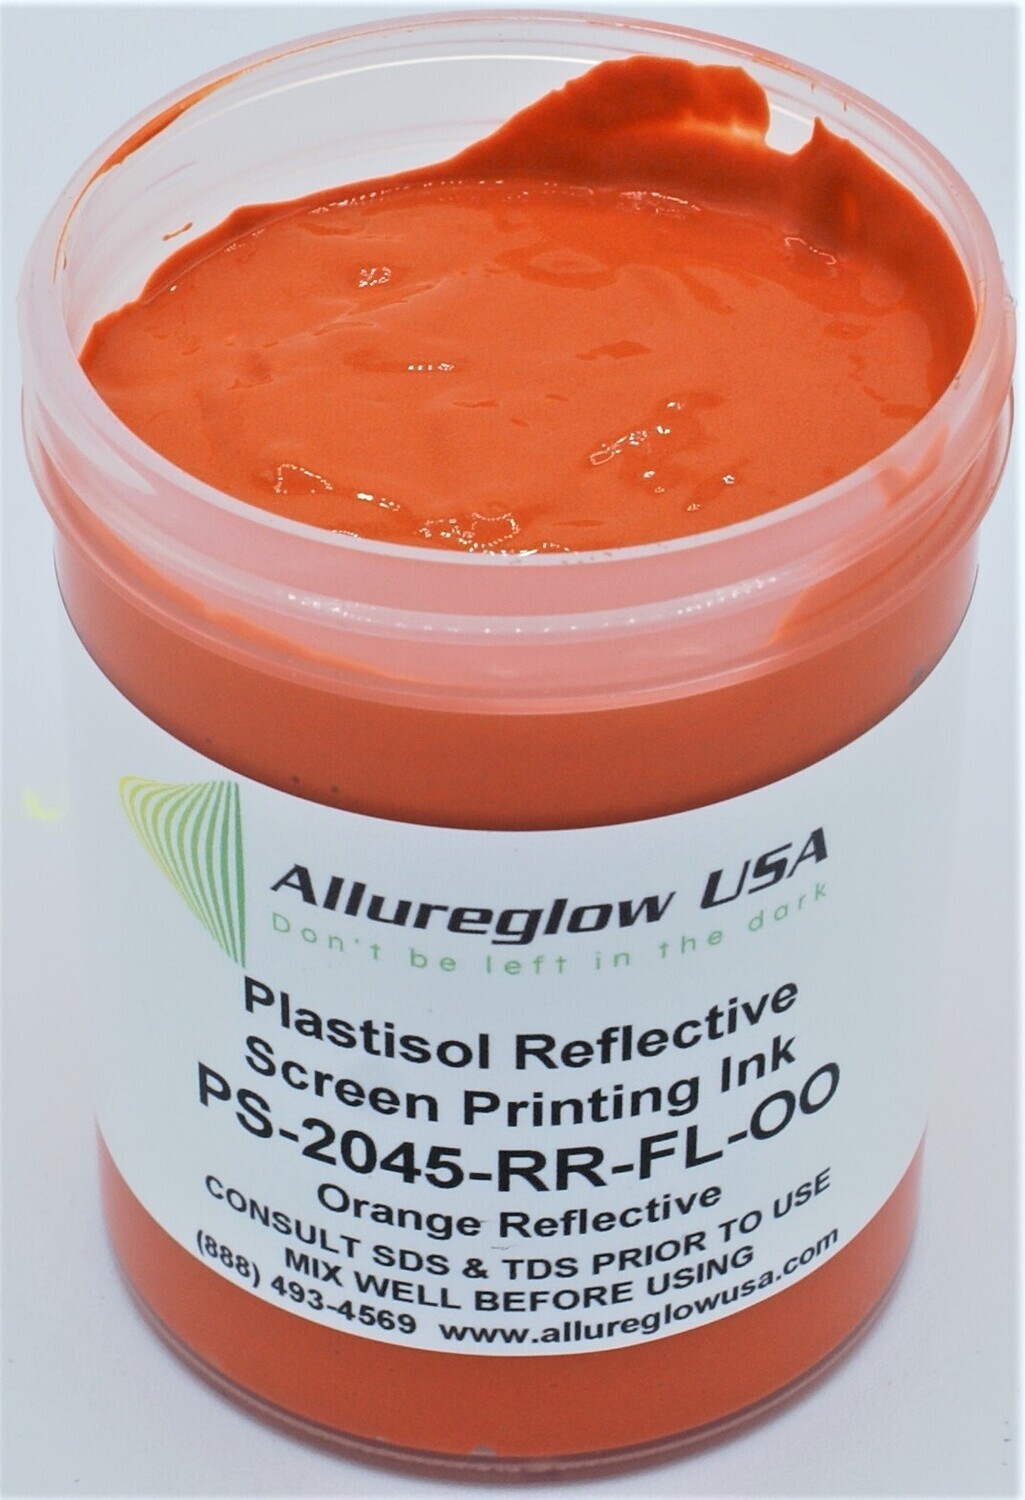 PS-2045-RR-FL-OO-FV PLASTISOL FLUORESCENT ORANGE REFLECTIVE INK 5 GALLON